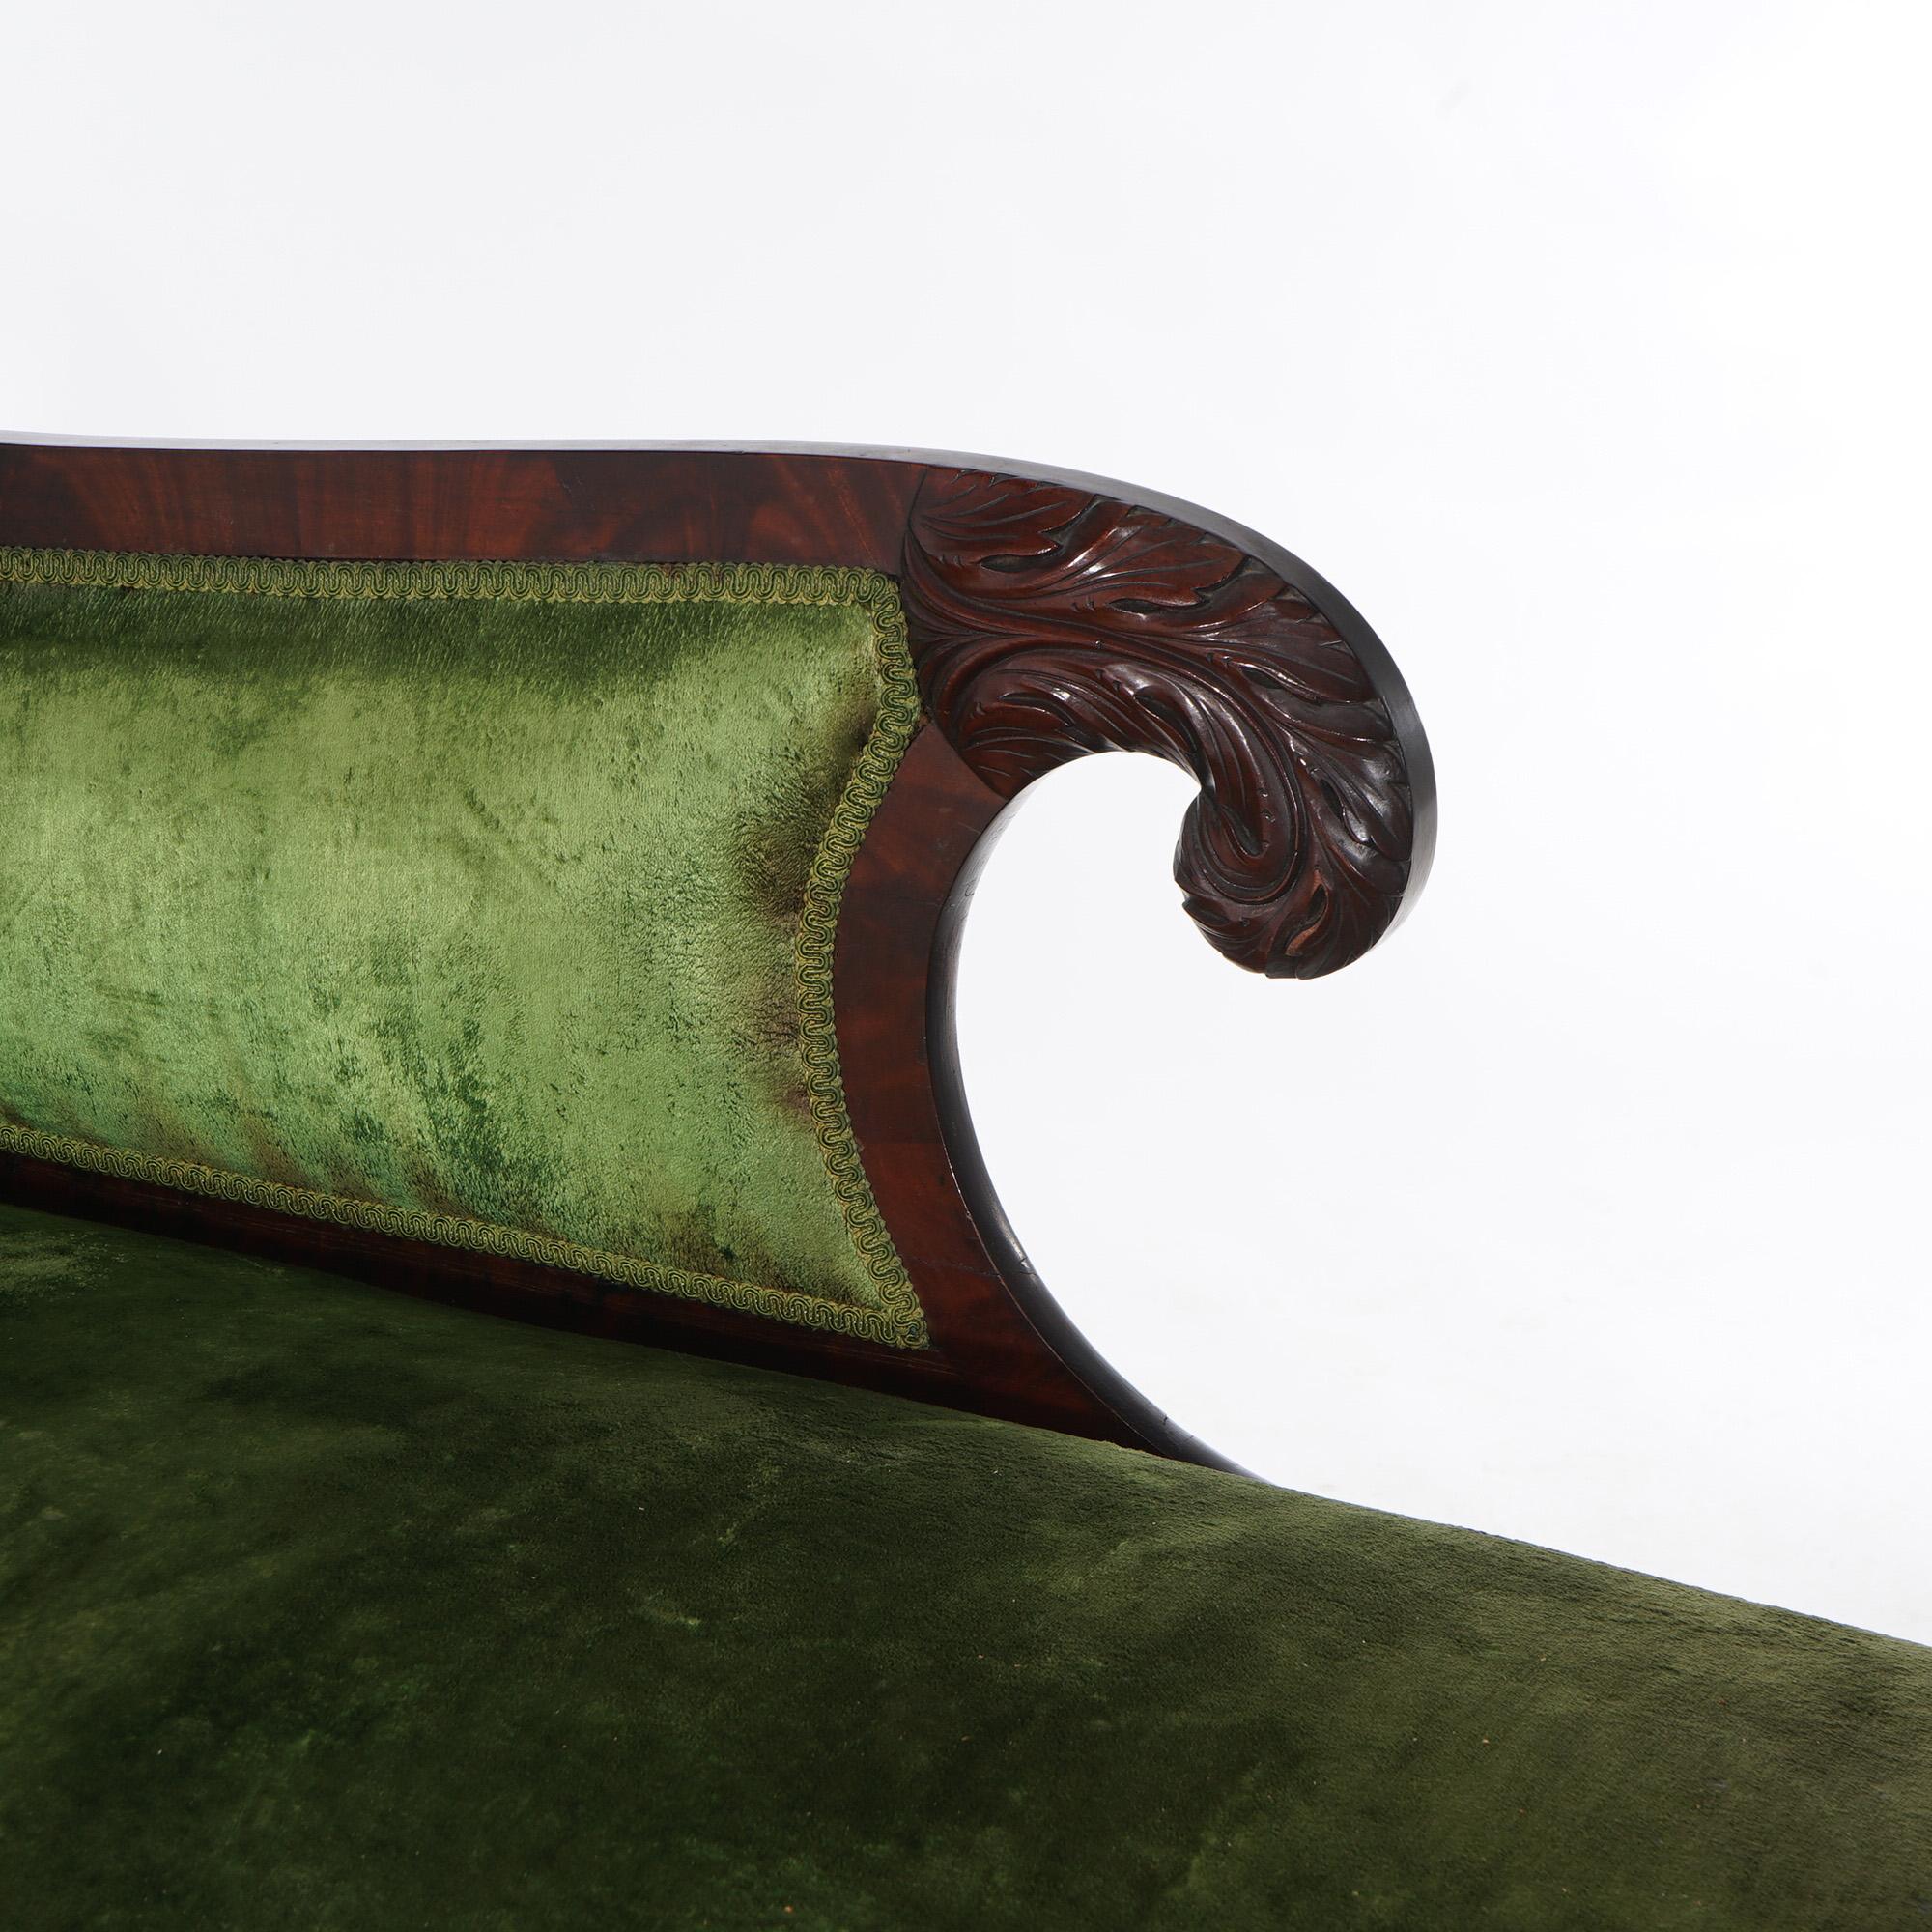 Antikes neoklassizistisches amerikanisches Empire-Sofa aus geflammtem Mahagoni im Empire-Stil, C1840 (19. Jahrhundert) im Angebot